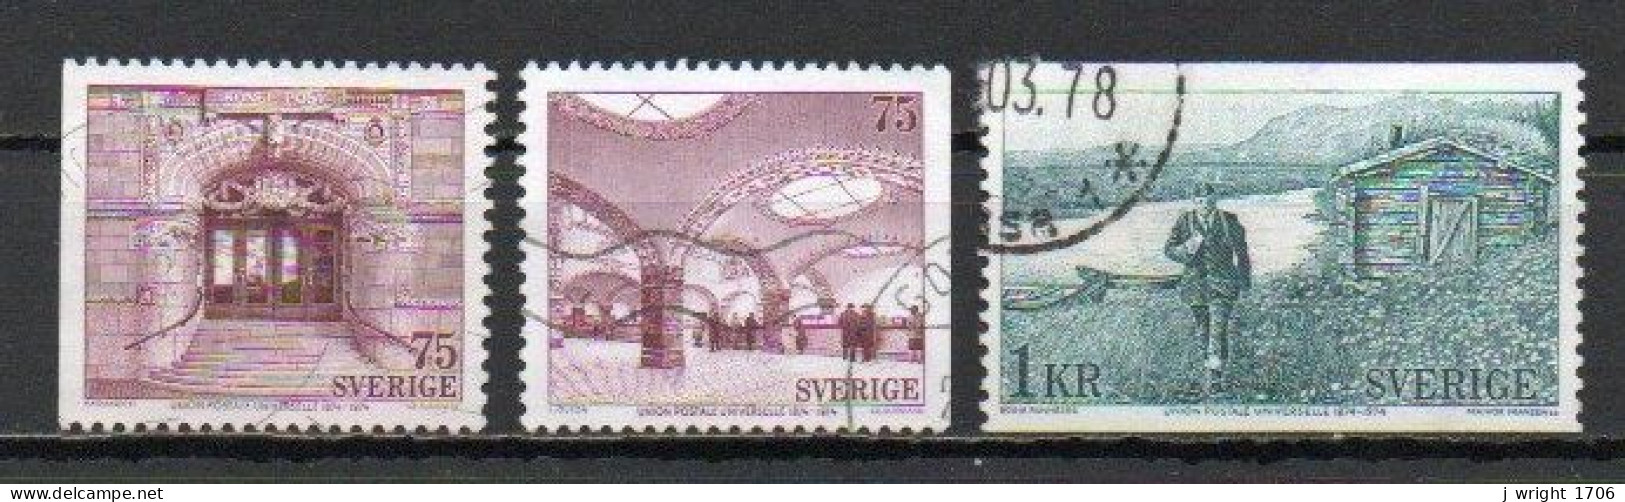 Sweden, 1974, UPU Centenary, Set, USED - Gebruikt